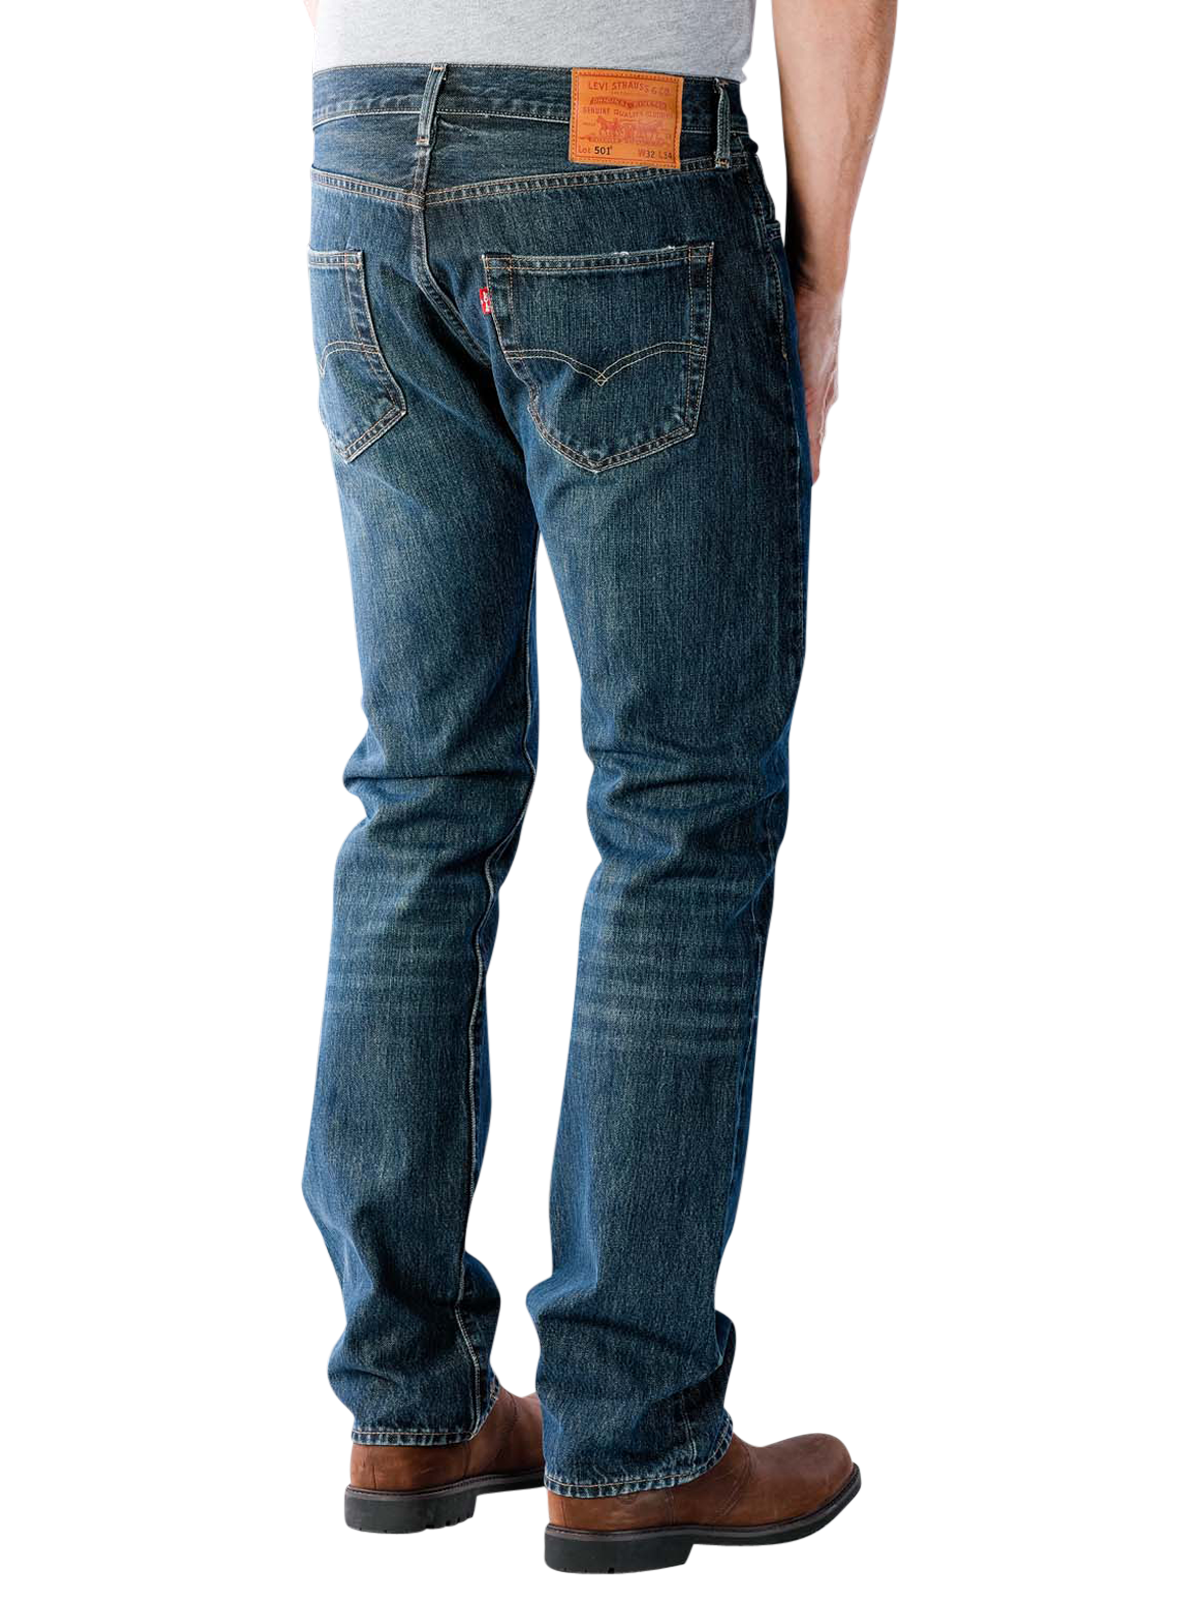 Levis 501 Jeans Straight snoot  Gratis Lieferung  JEANSCH